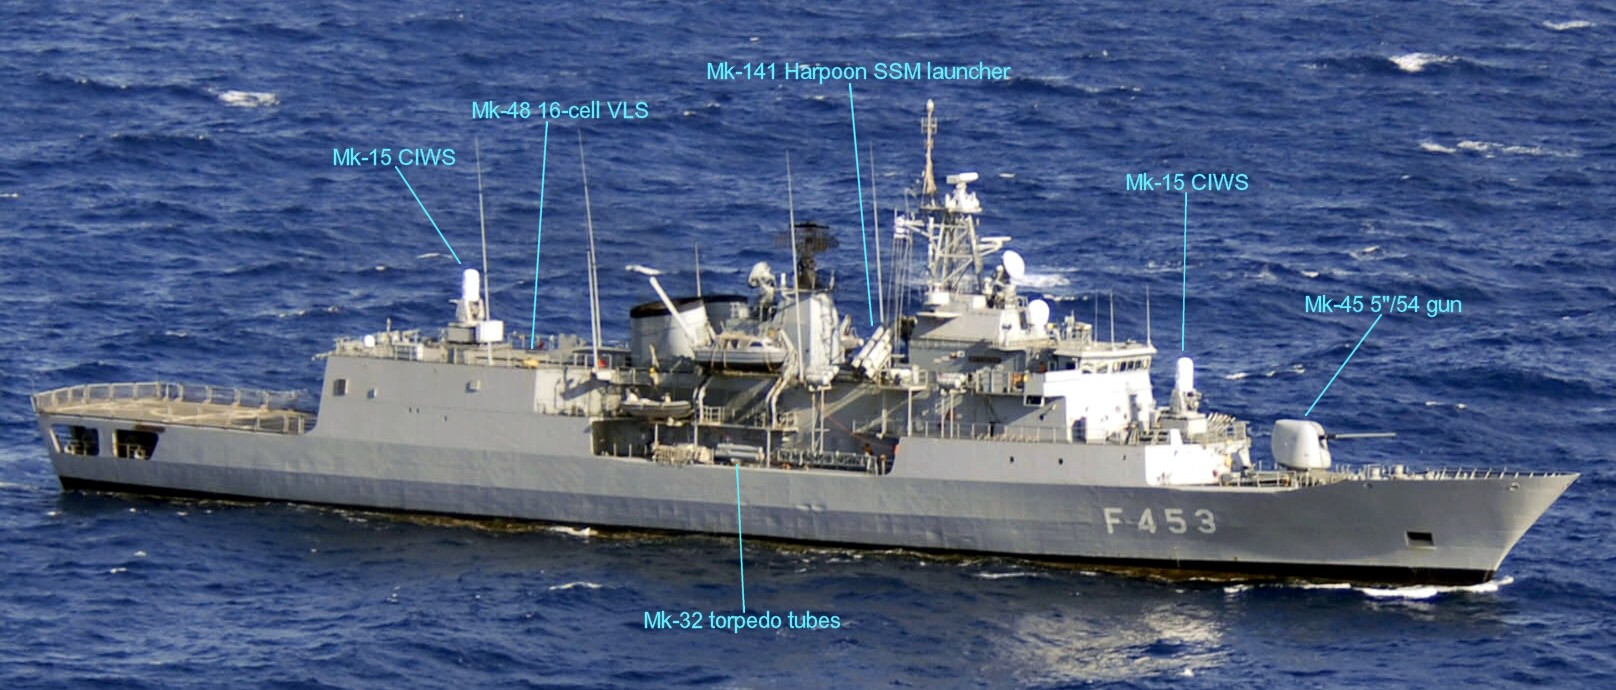 hydra class frigate meko-200hn hellenic navy greece armament mk-45 gun mk-141 rgm-84 harpoon ssm mk-48 vls rim-7 rim-162 evolved sea sparrow missile essm mk-15 phalanx ciws mk-32 torpedo tubes mk-46